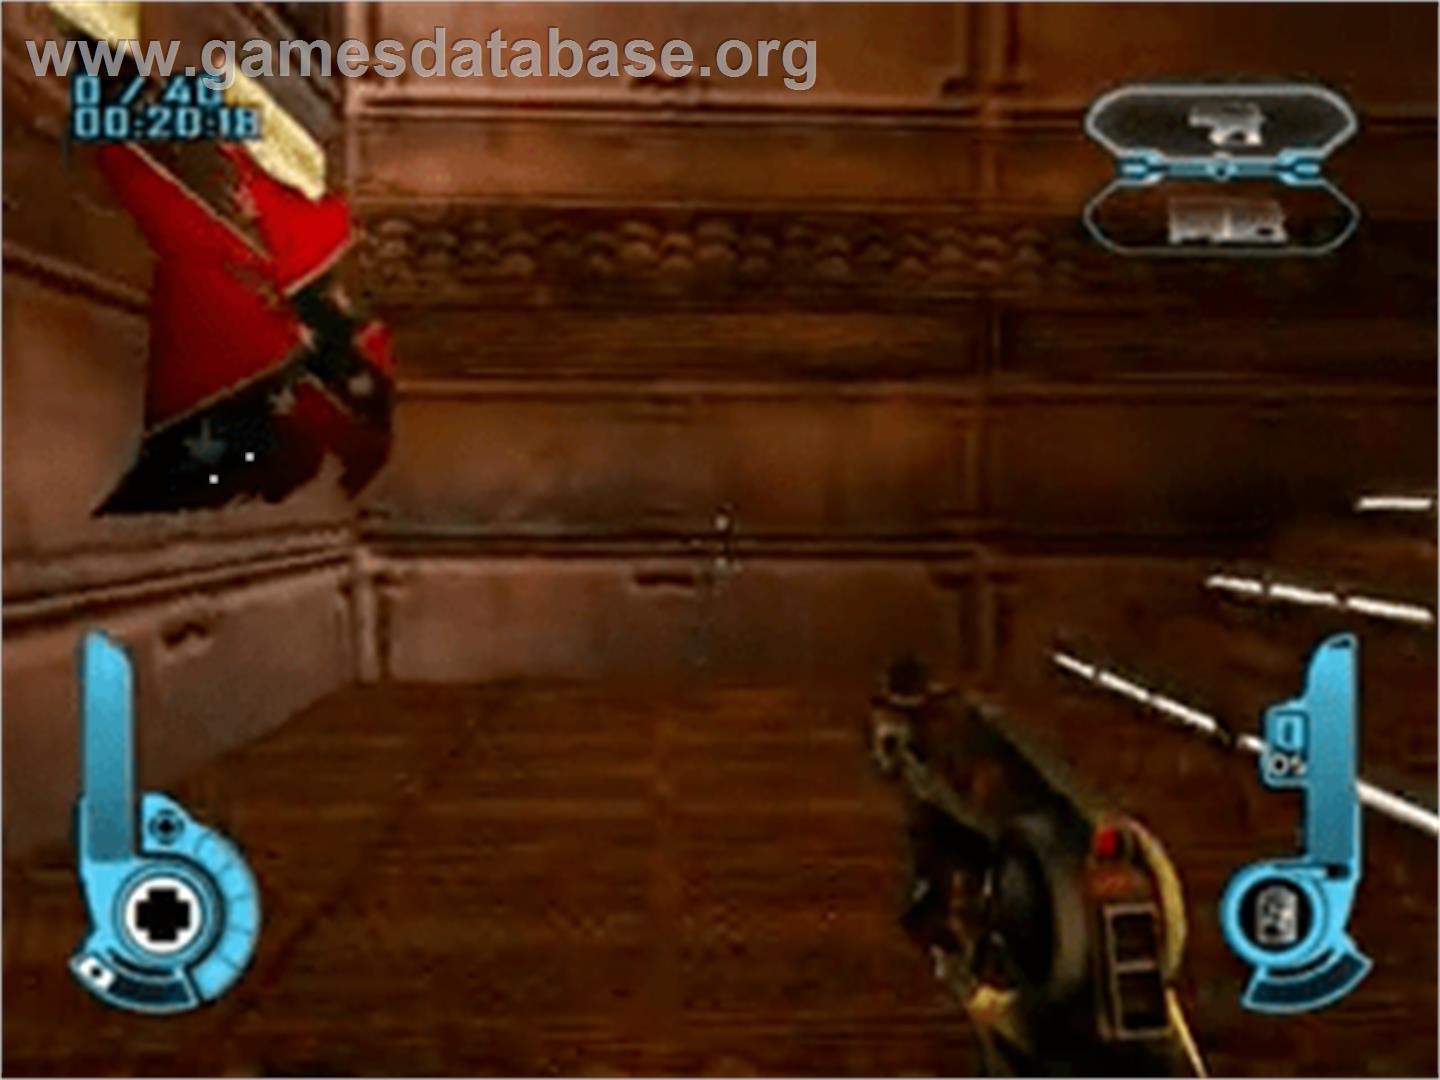 Judge Dredd: Dredd vs Death - Sony Playstation 2 - Artwork - In Game